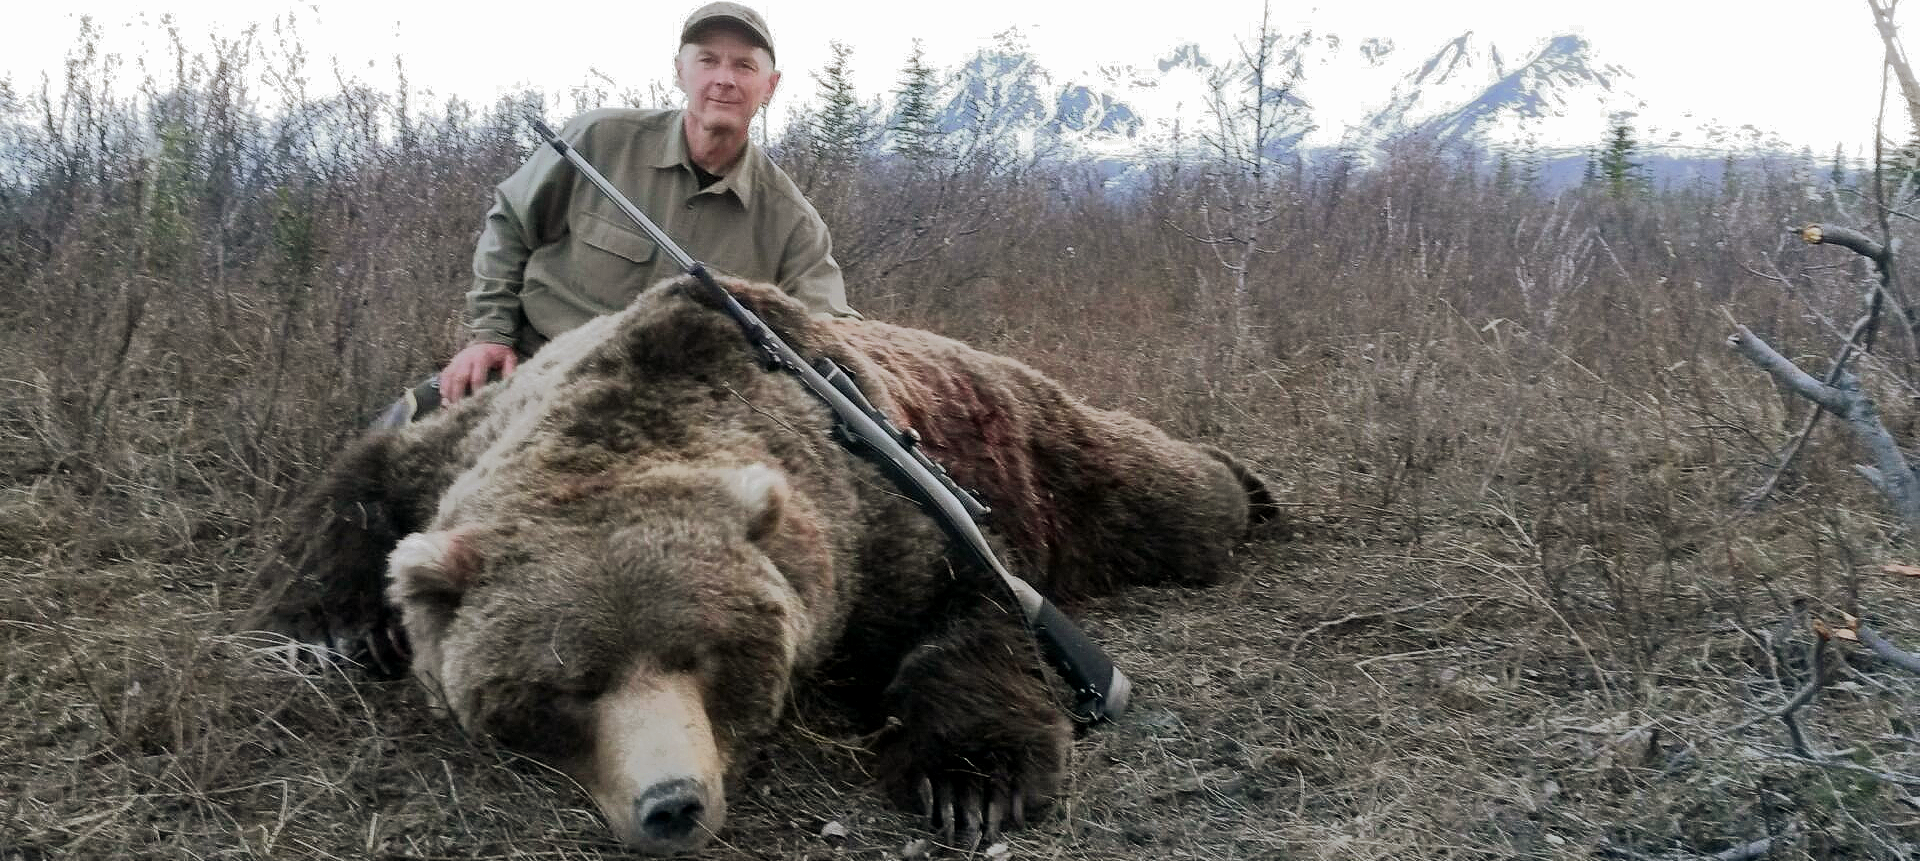 Chugach Mountains , Talkeetna Mountains, Alaska Grizzly bear hunting, Spring, Fall Grizzly bear hunt Alaska